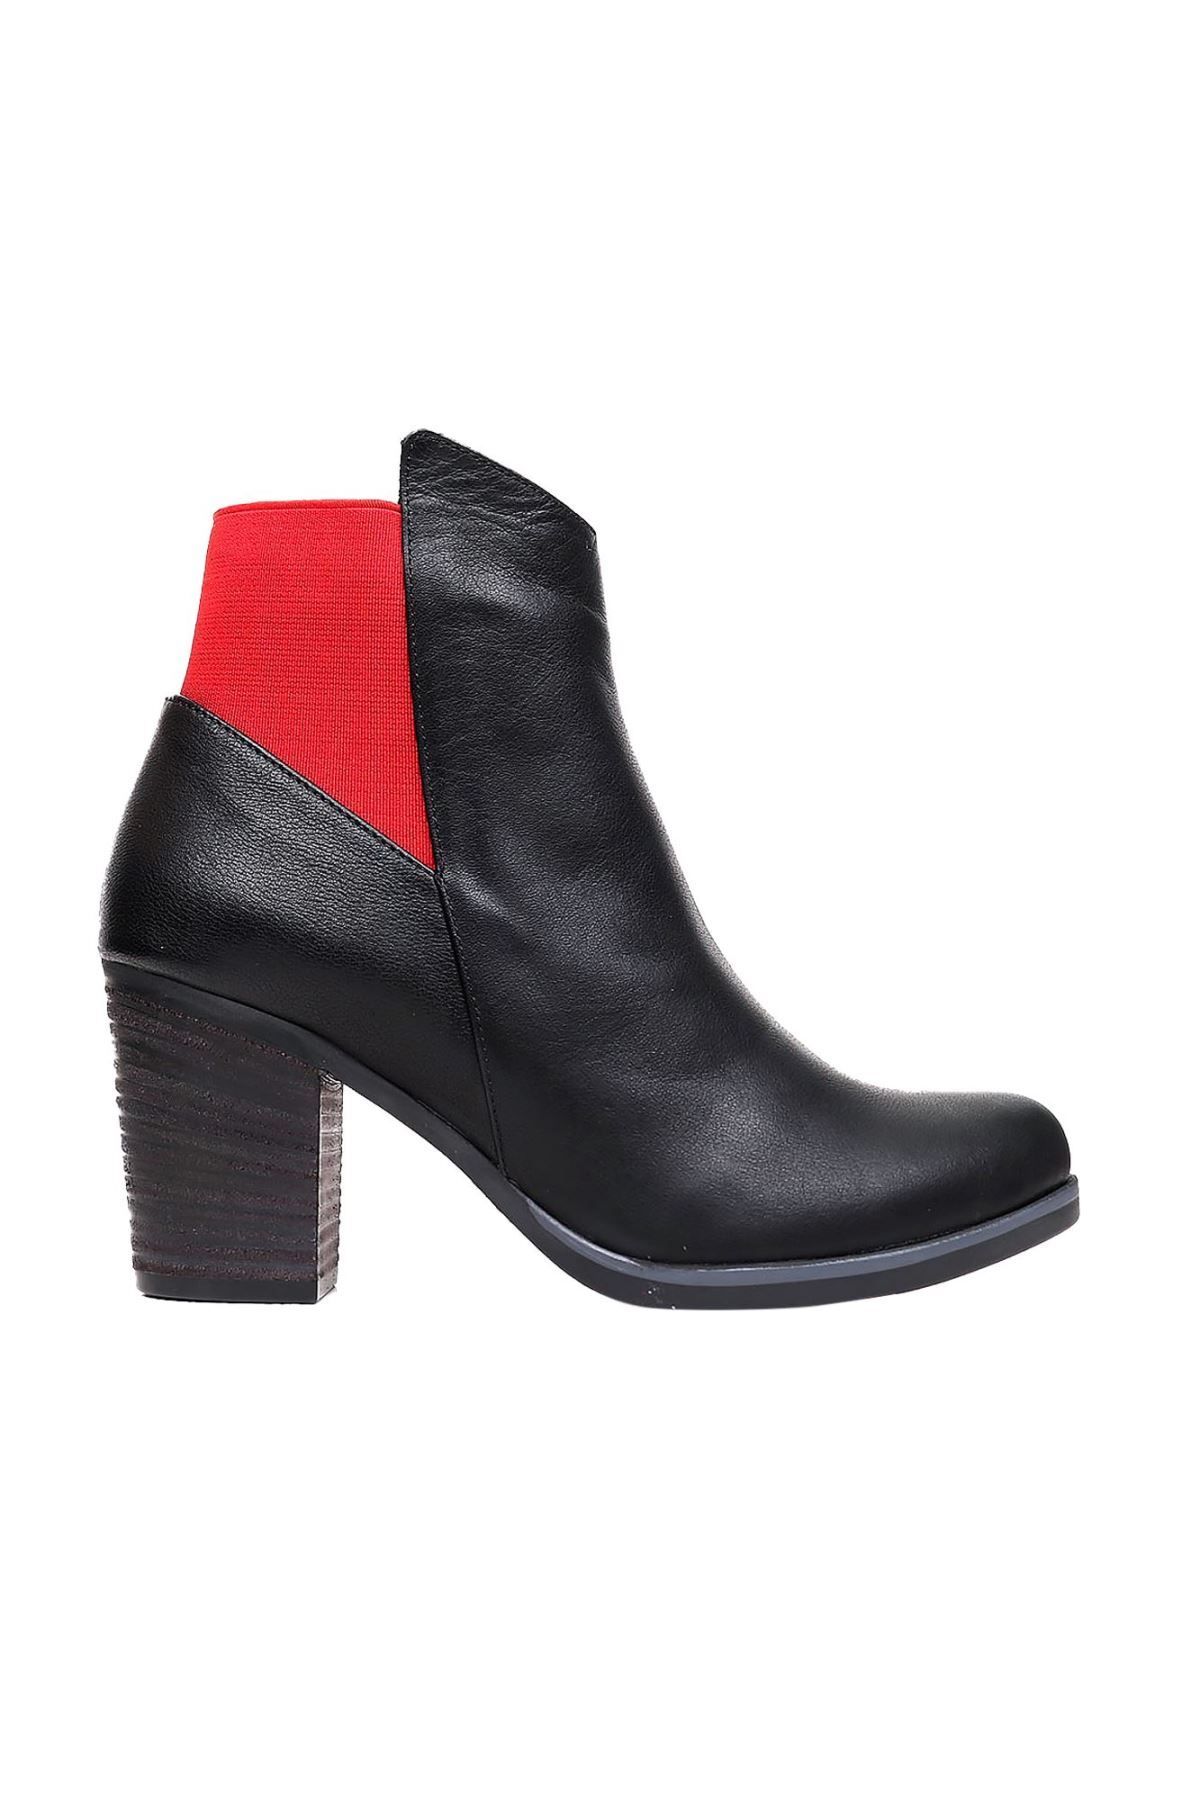 BUENO Shoes Kırmızı Deri Kadın Topuklu Bot